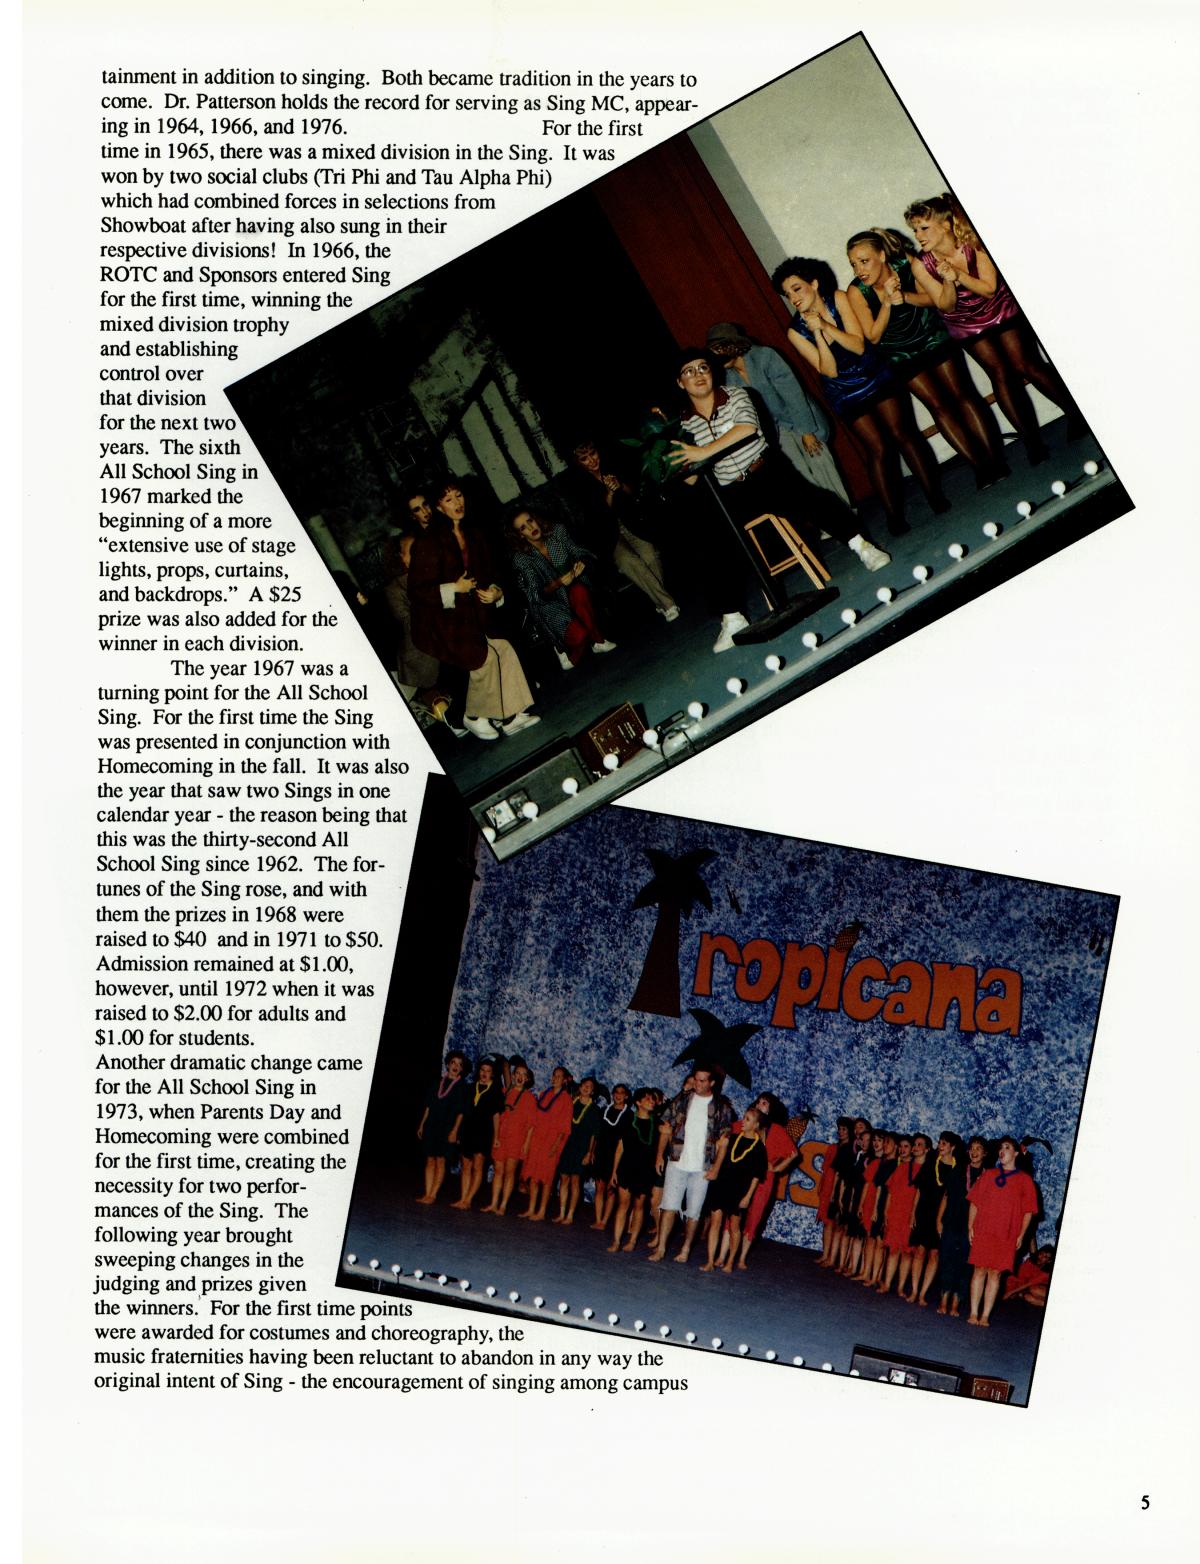 The Bronco, Yearbook of Hardin-Simmons University, 1994
                                                
                                                    5
                                                